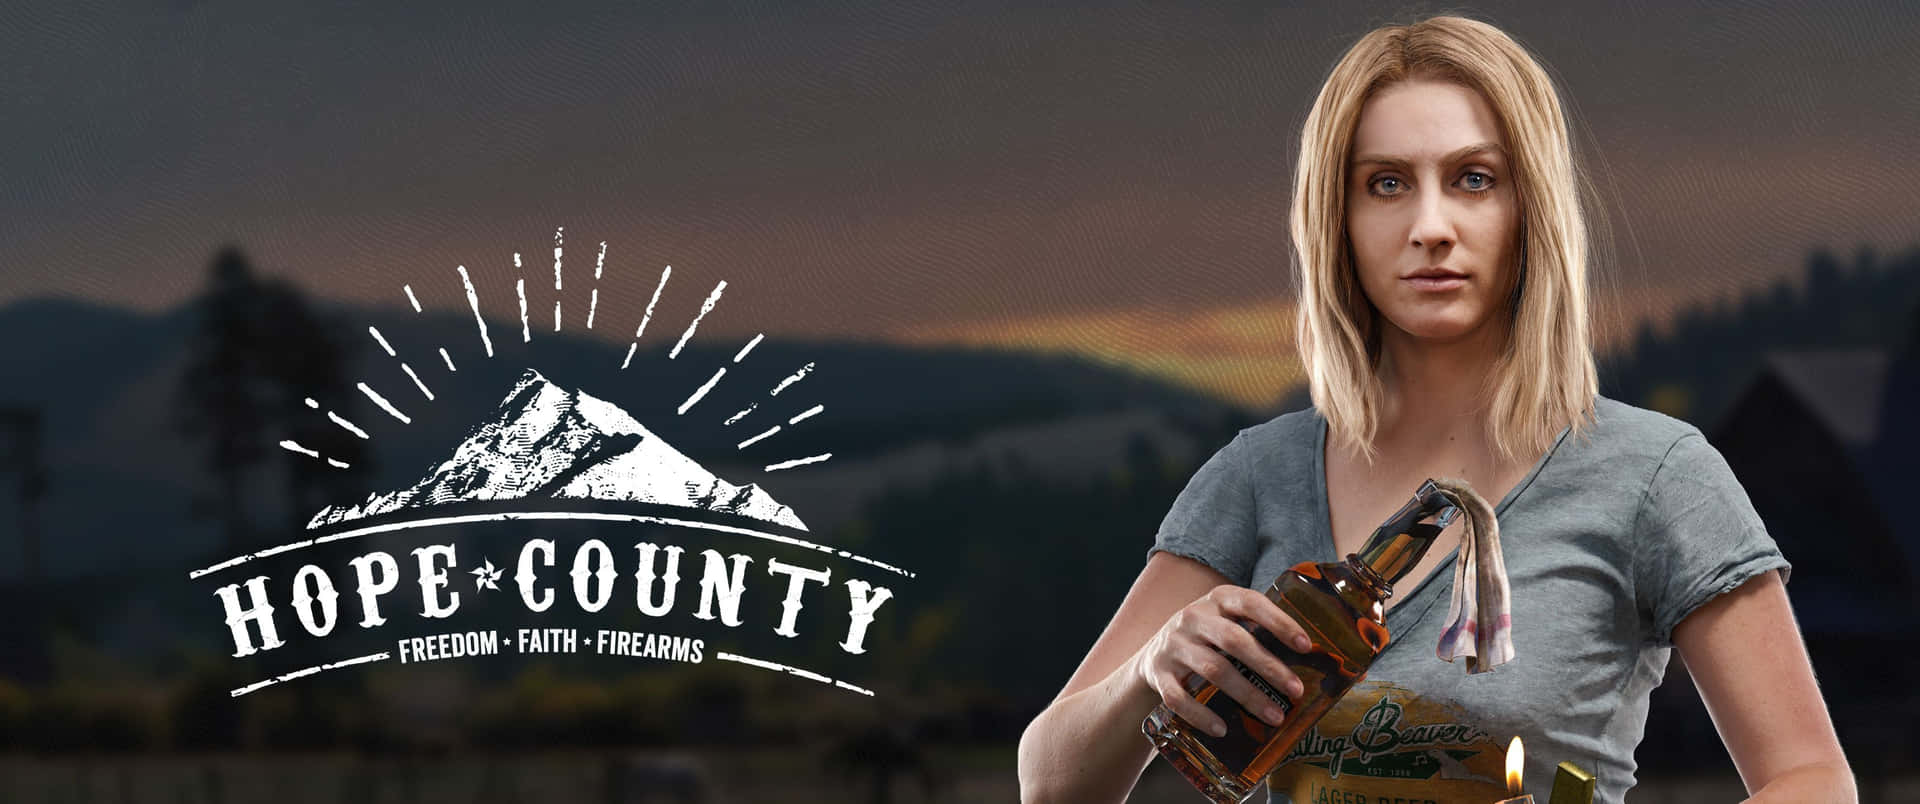 Hope County - A Woman Holding A Gun